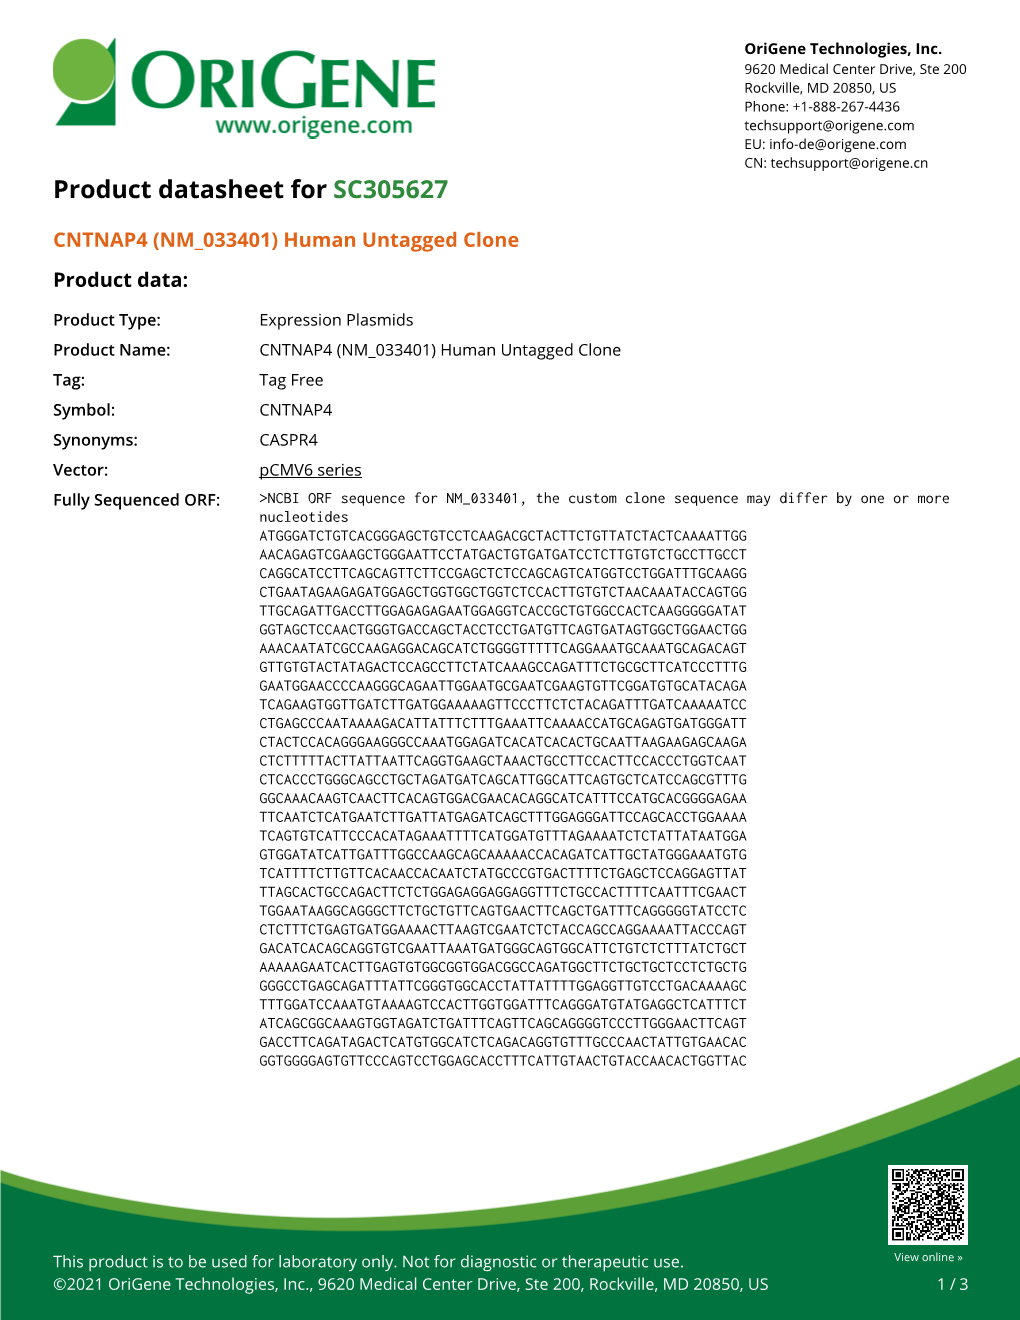 CNTNAP4 (NM 033401) Human Untagged Clone Product Data